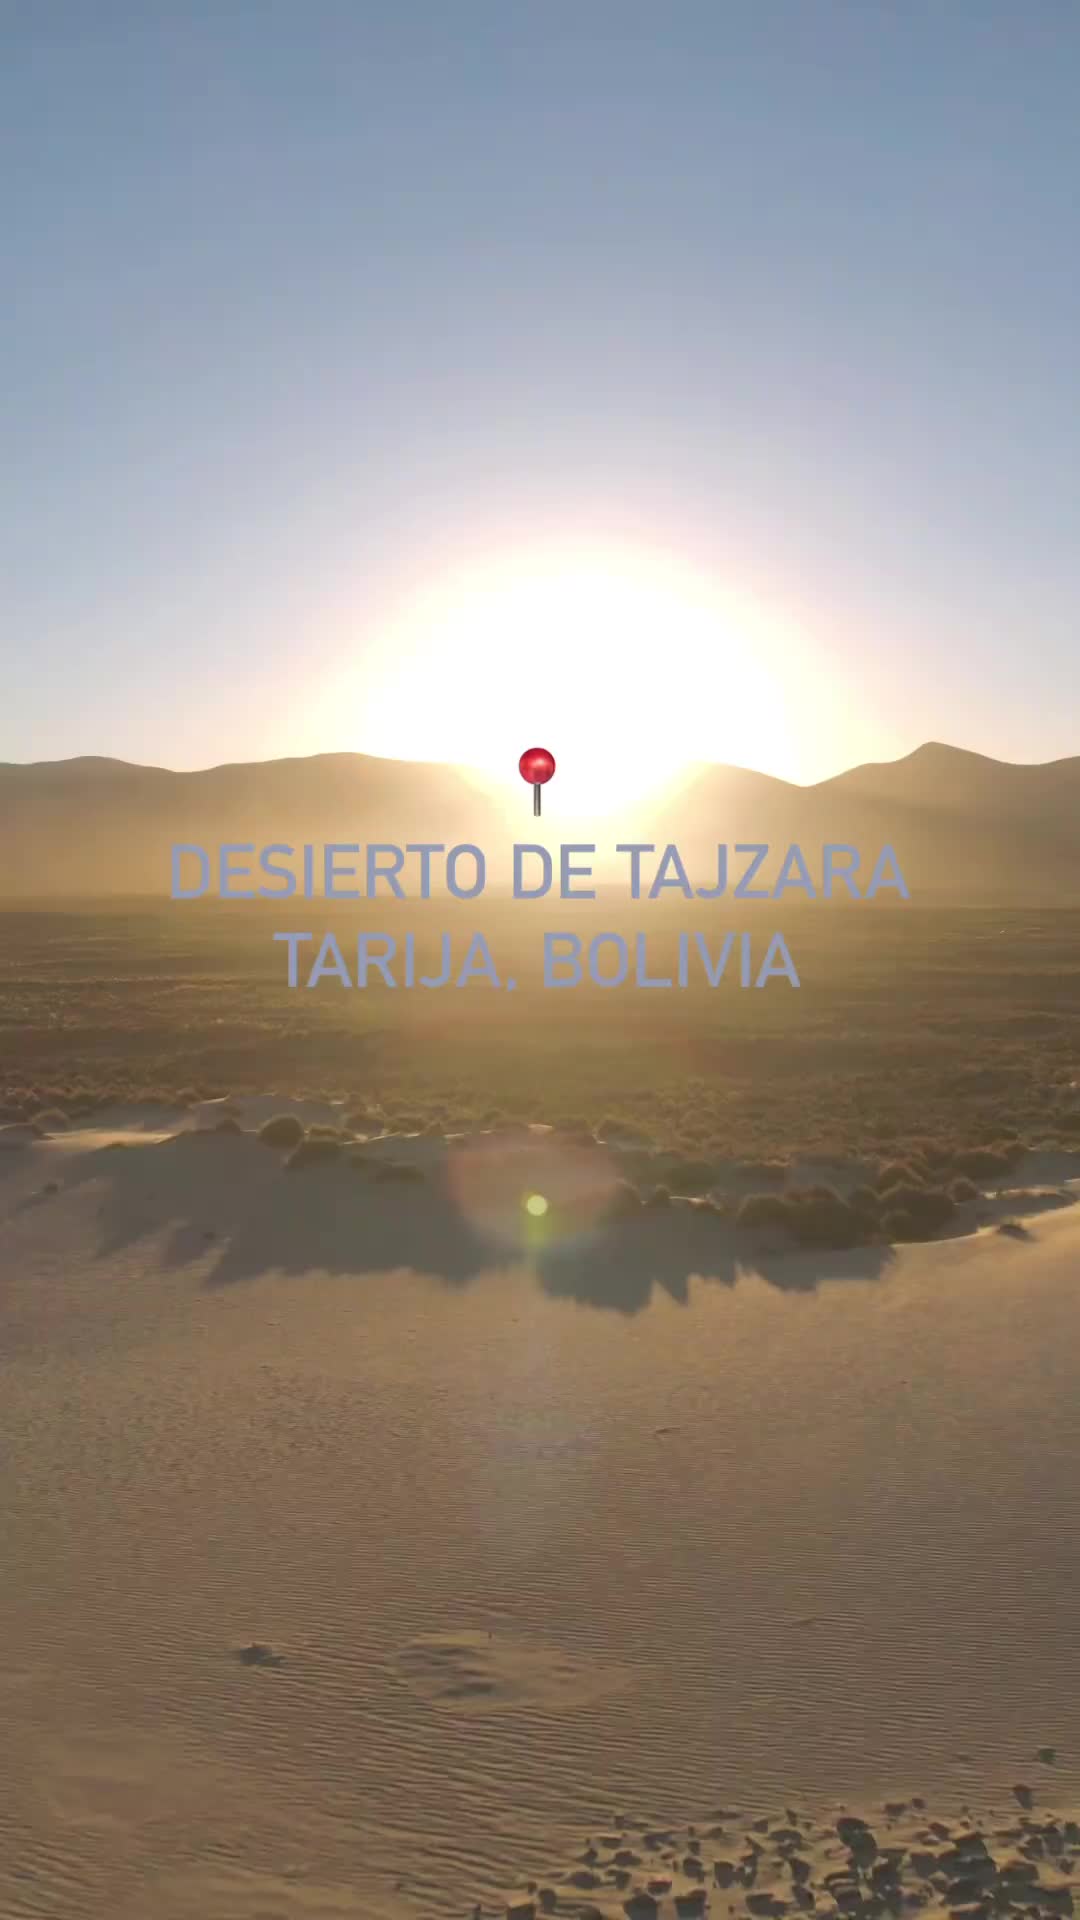 Explore the Tajzara Desert near Tarija, Bolivia